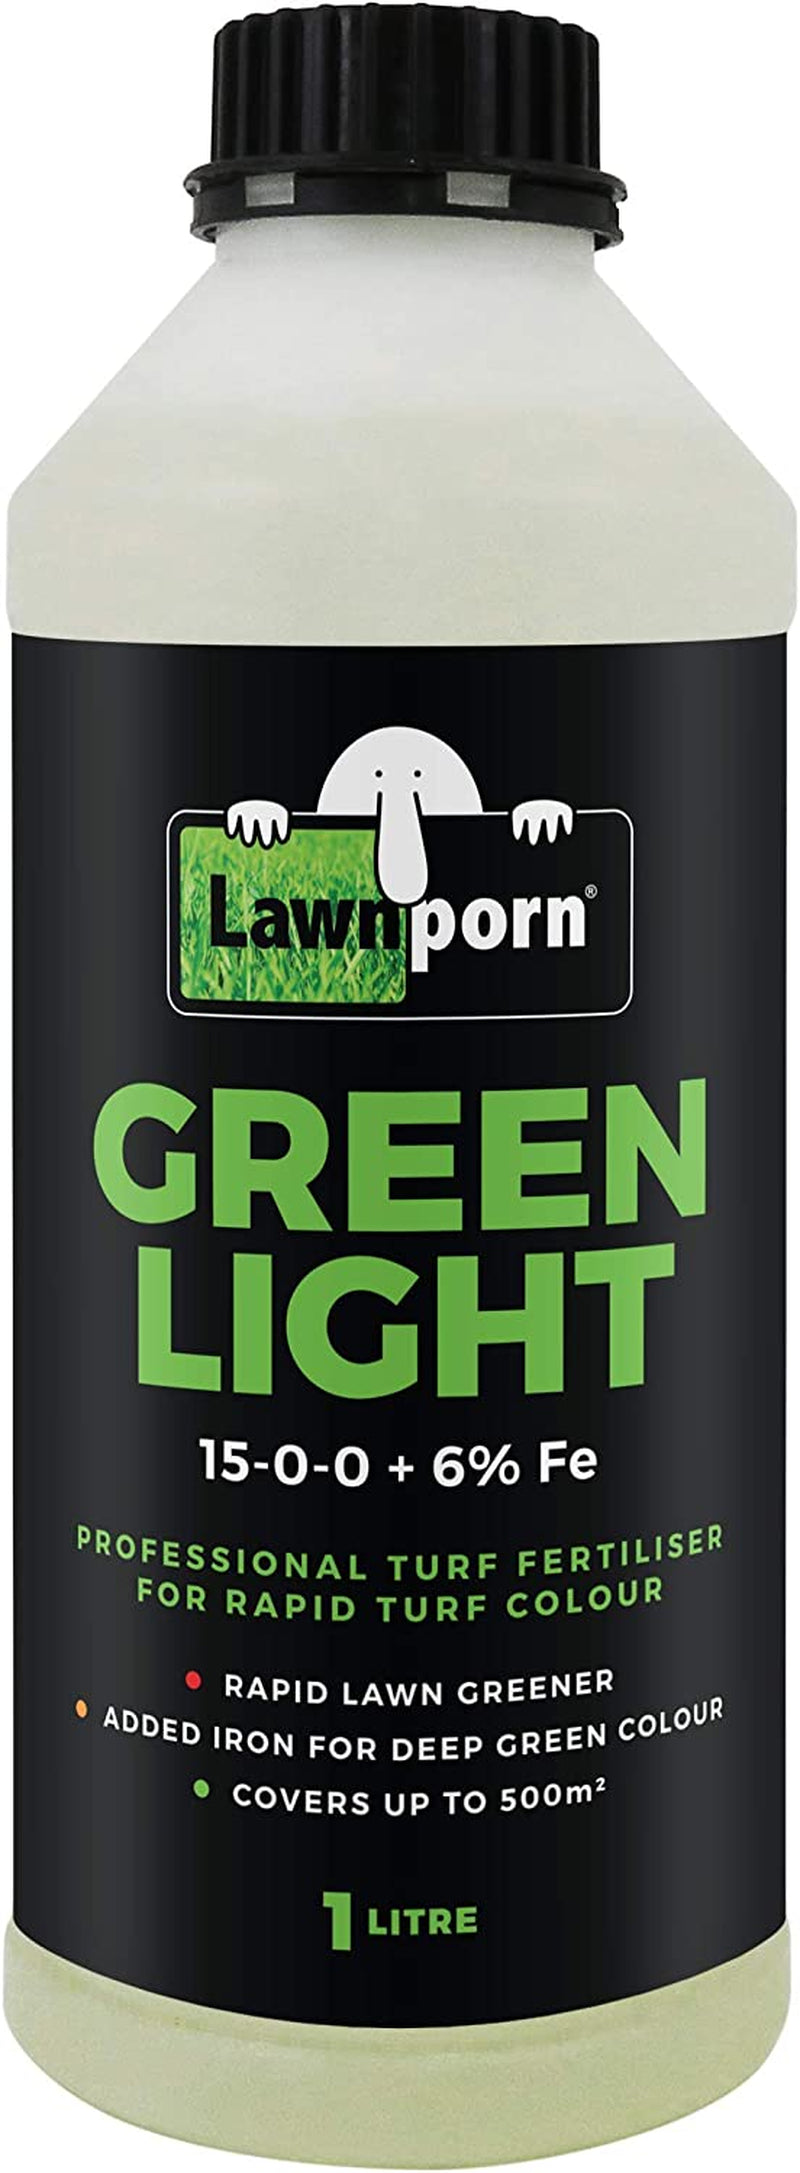 Lawnporn, Lawnporn Green Light Fertiliser